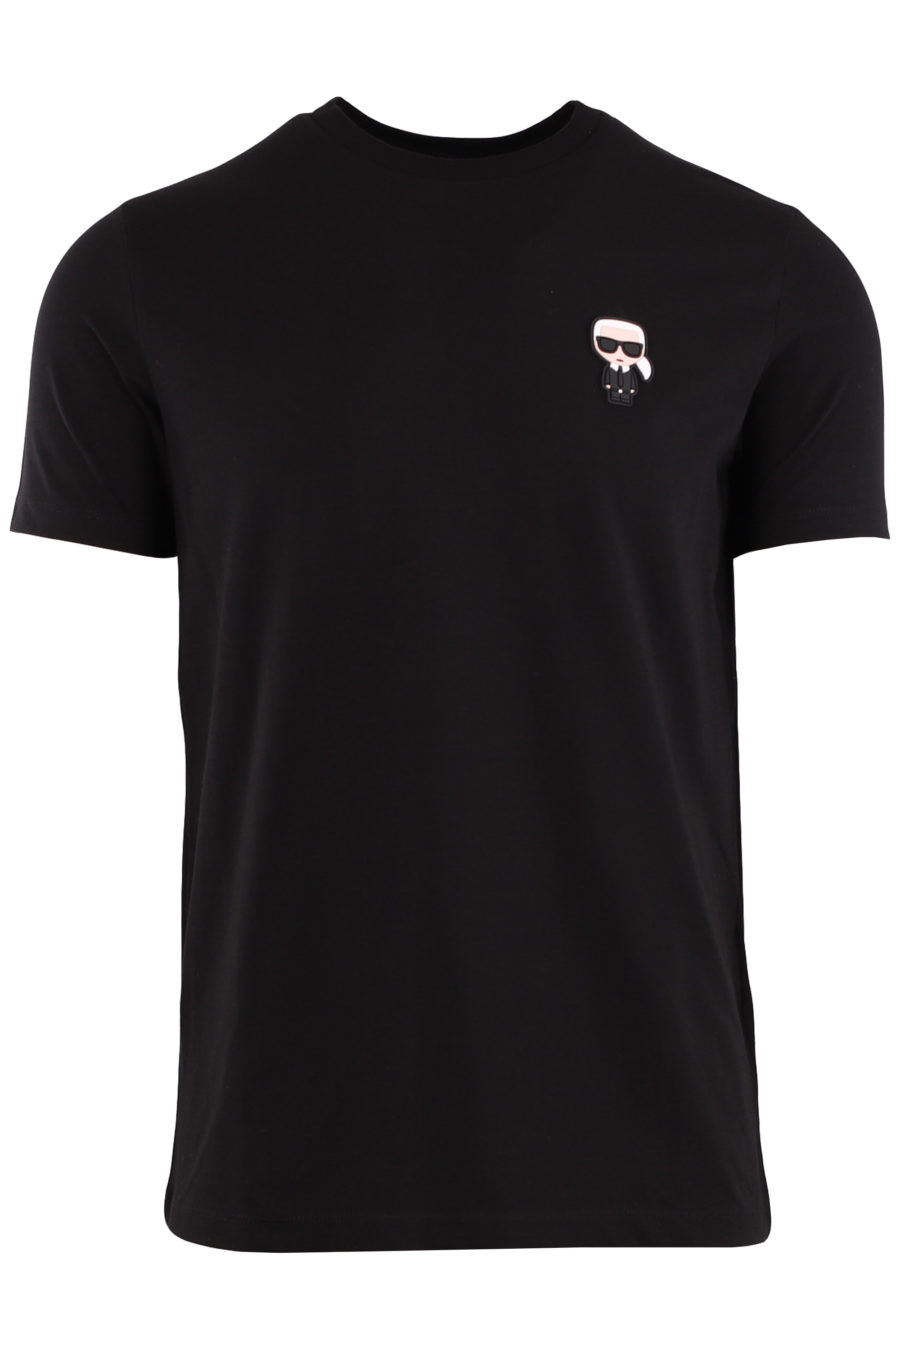 Karl T-shirt noir avec logo caoutchouté - 262a791a37ca4f040483f56e03a24ea884495ed6